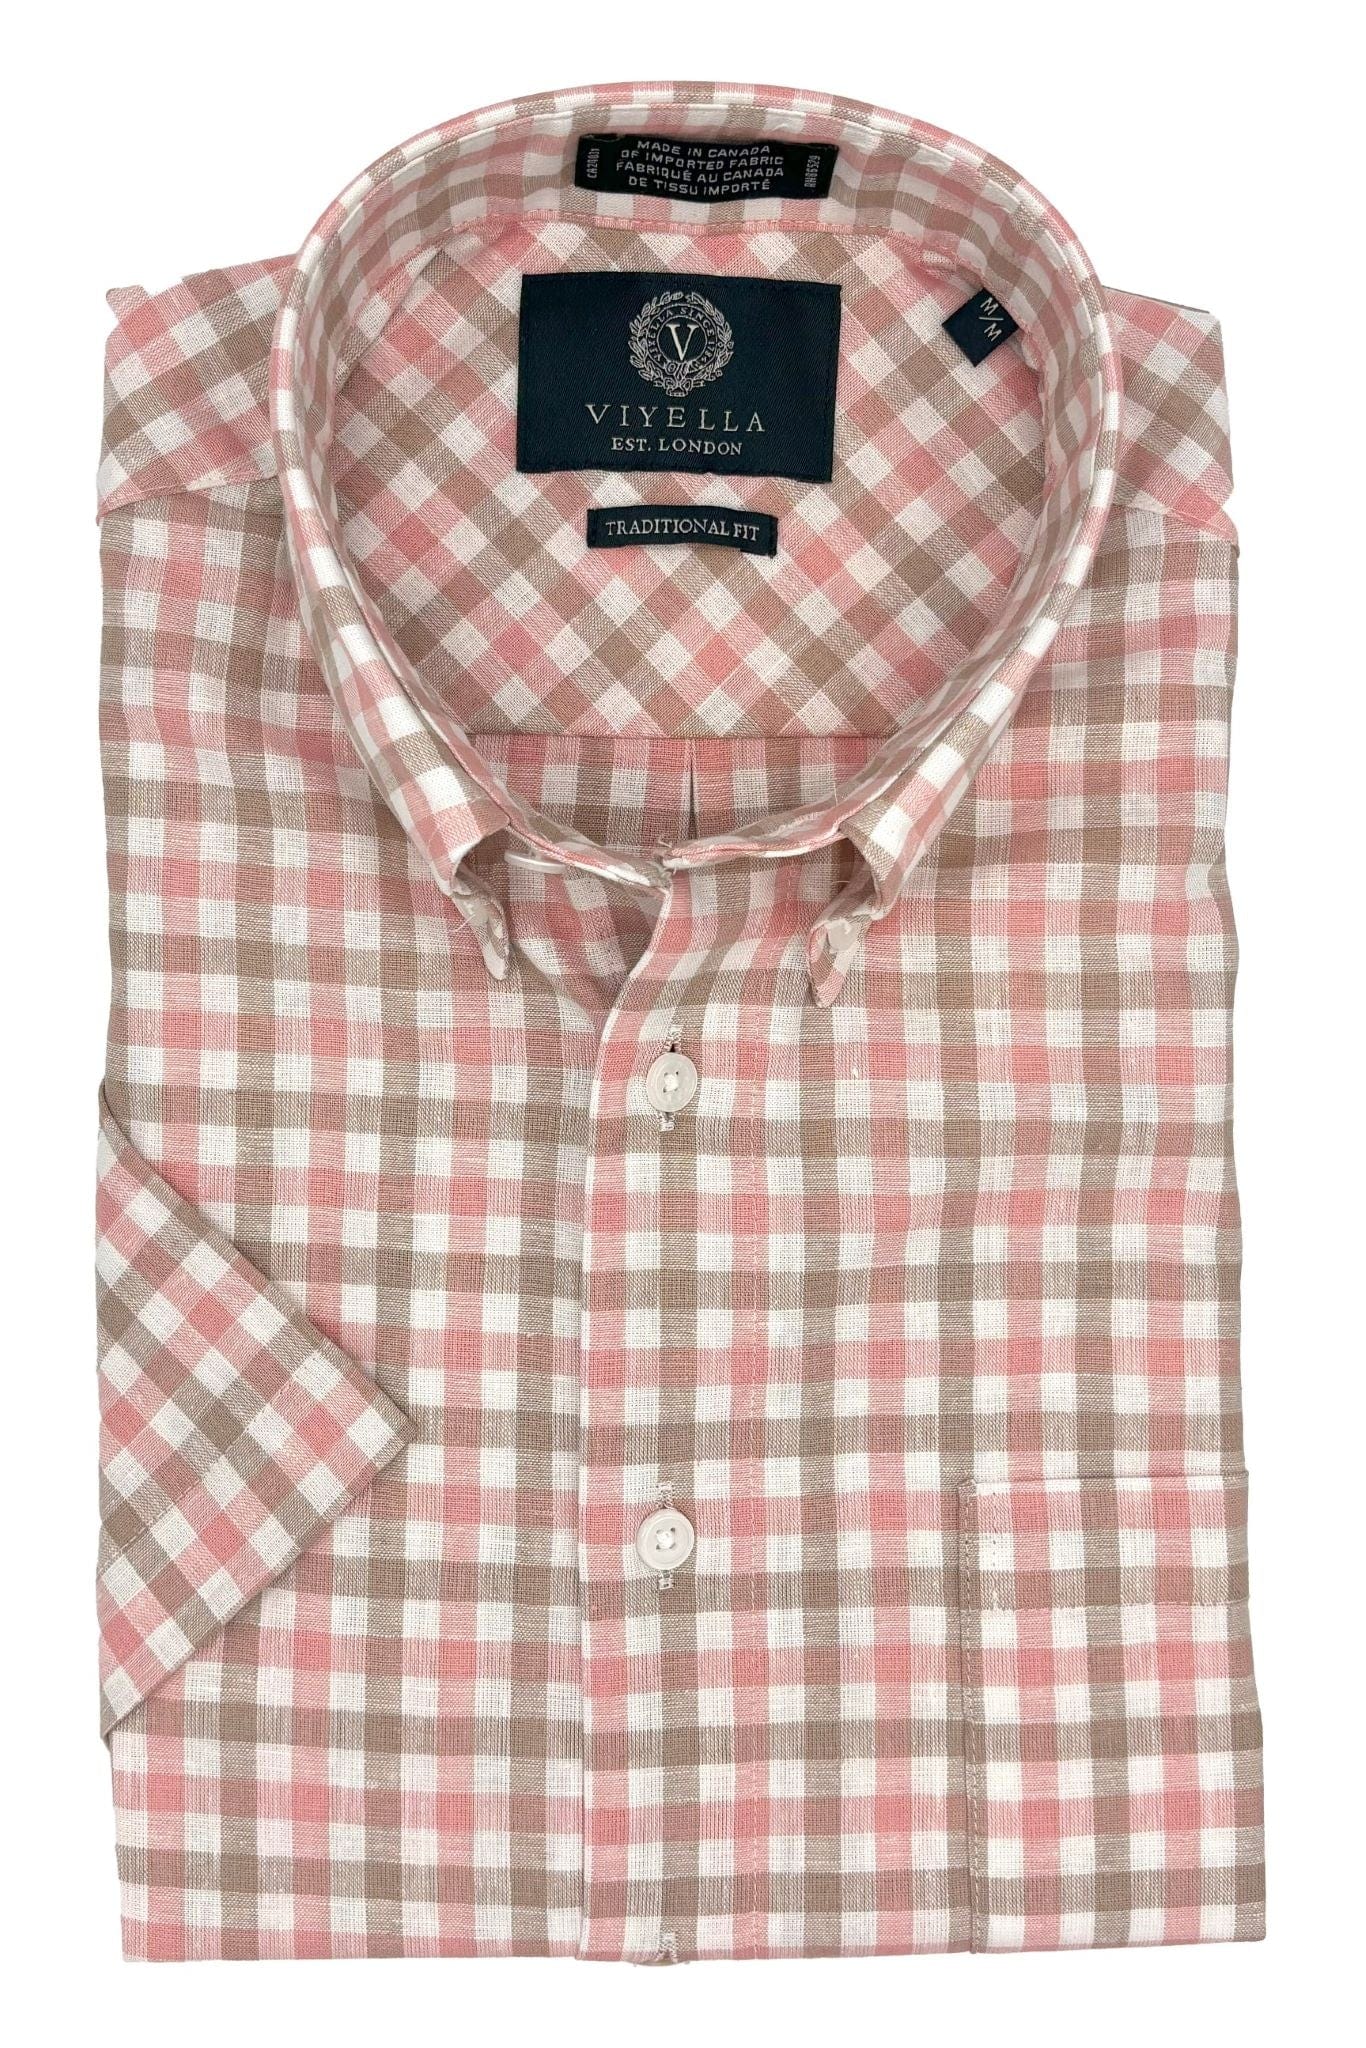 Viyella Coral Gingham Men's Short Sleeve Shirt in Cotton & Linen